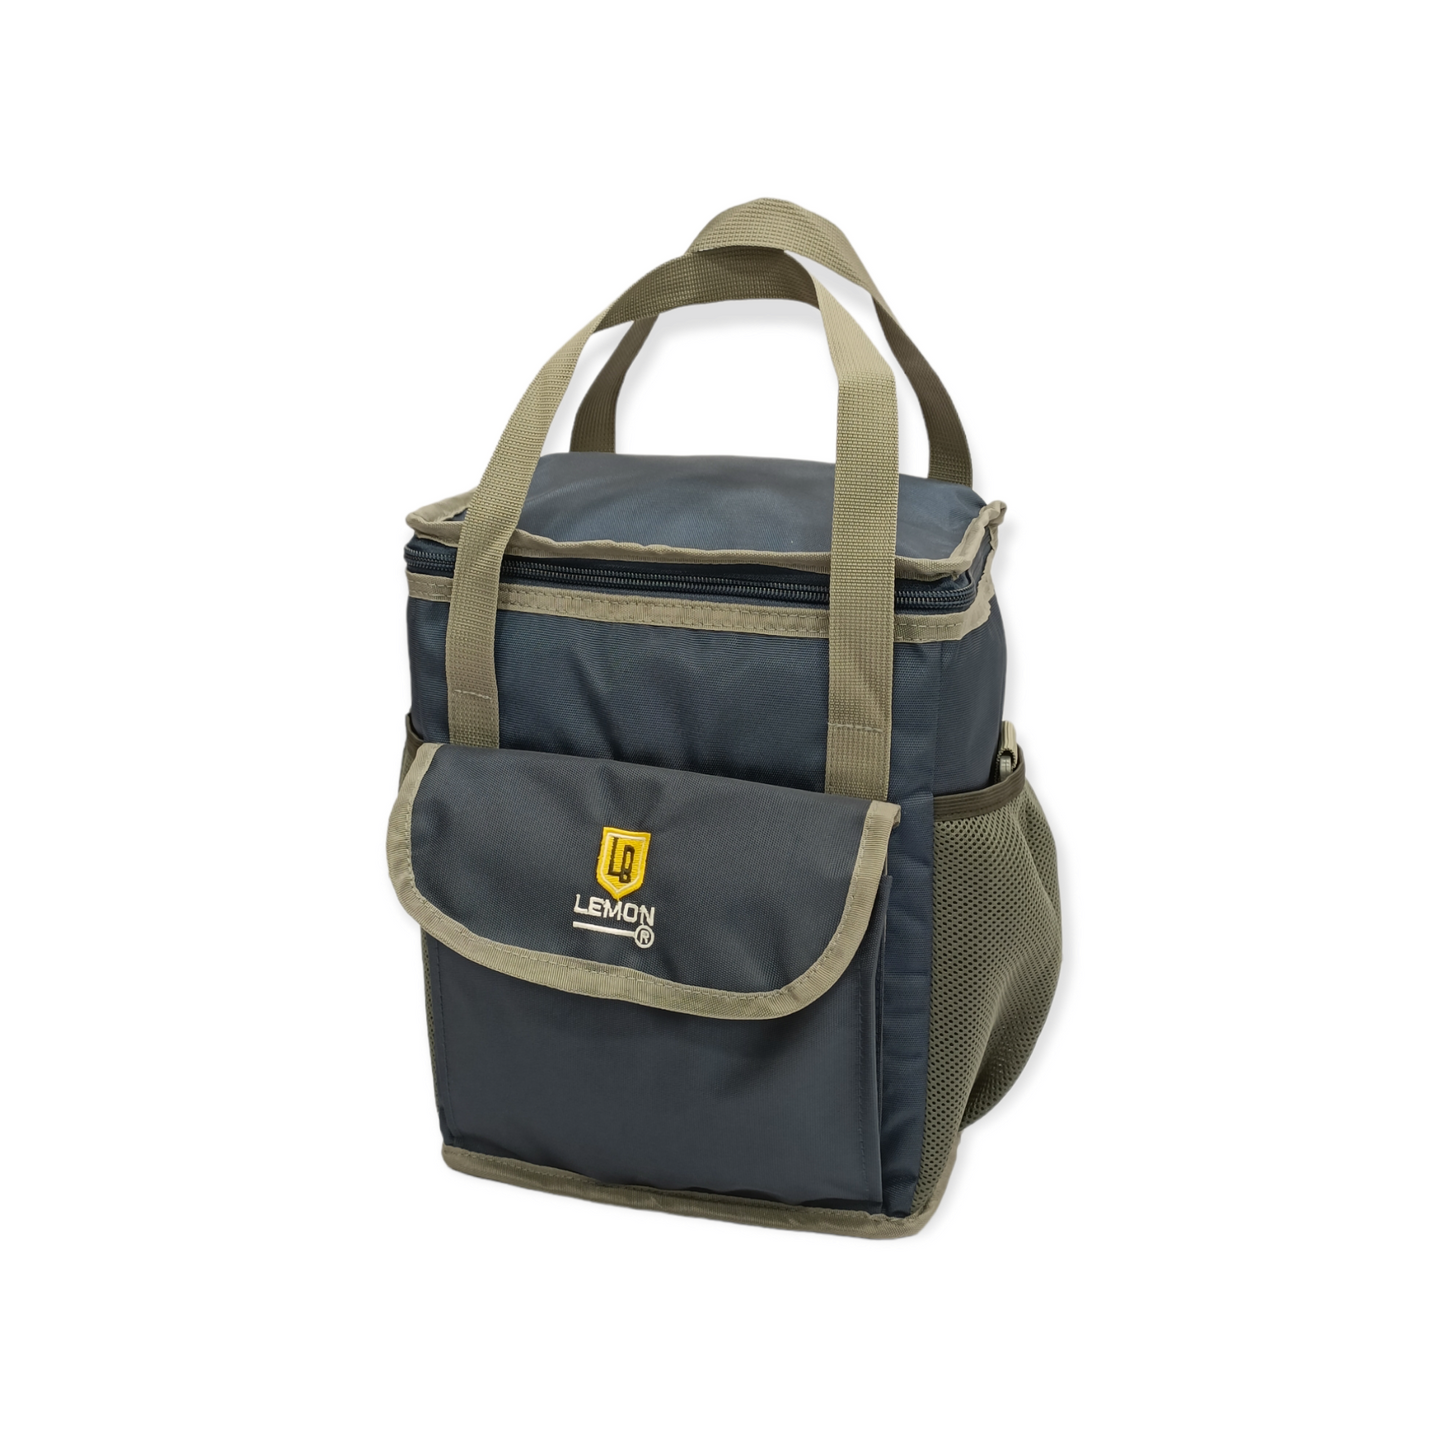 Premium quality Medium size Tiffin bag with dual bottle holder and long shoulder strap